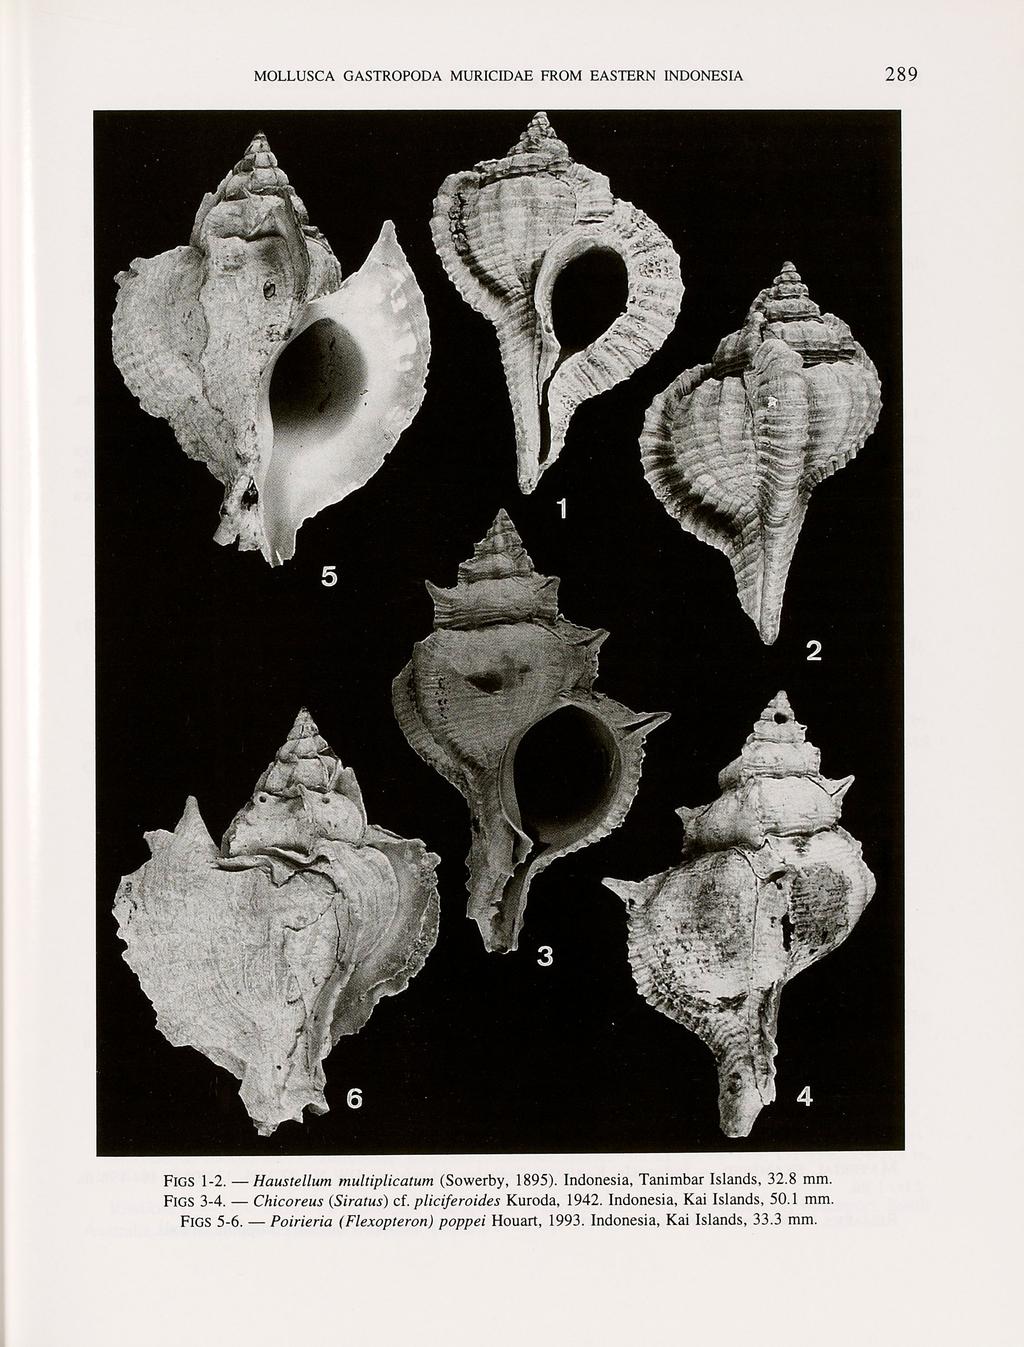 FIGS 1-2. Haustellum multiplicatum (Sowerby, 1895). Indonesia, Tanimbar Islands, 32.8 mm. FIGS 3-4. Chicoreus (Siralus) ci.